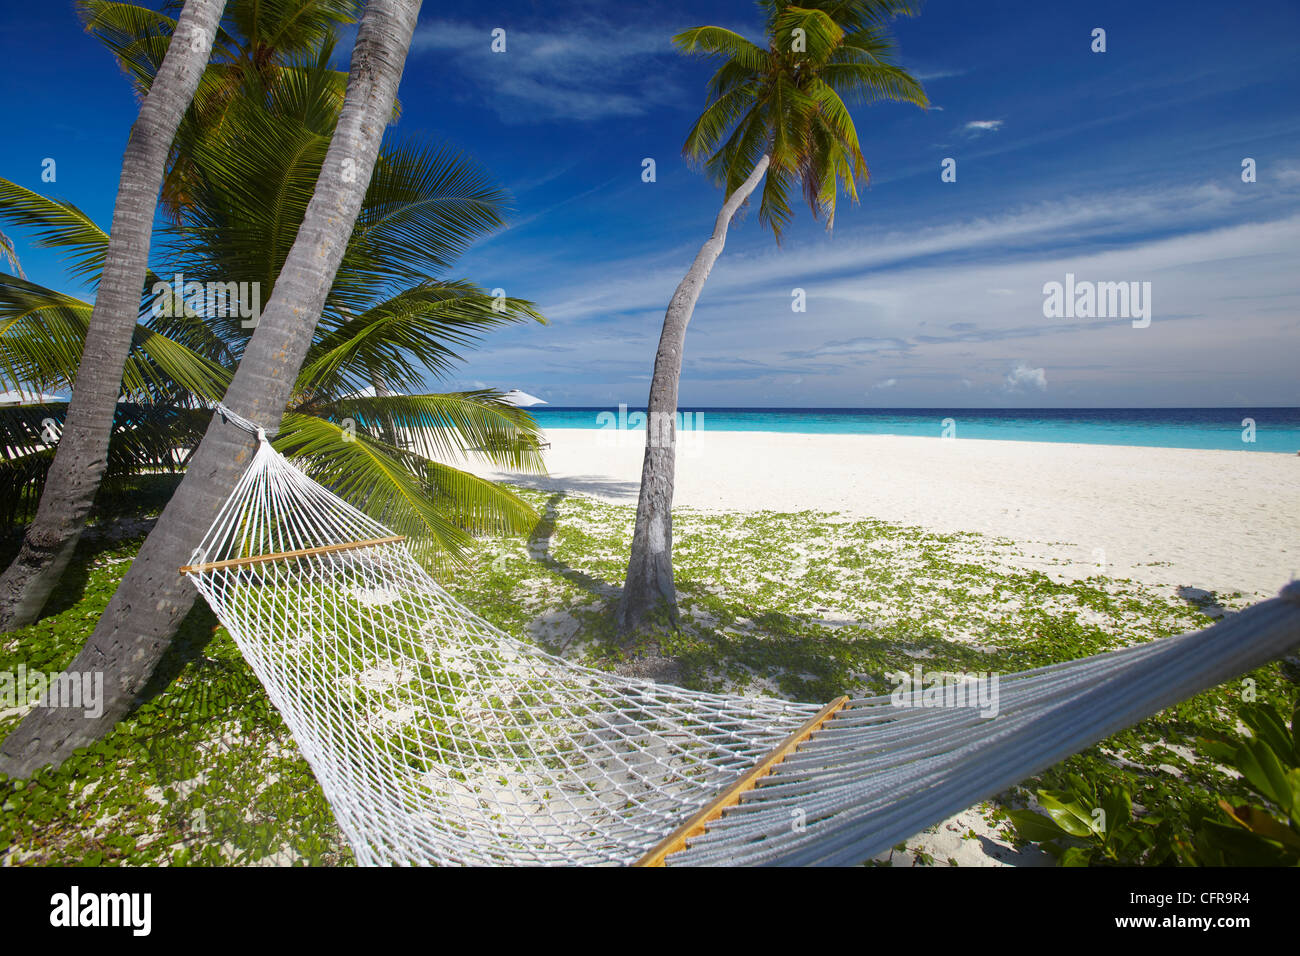 Hammock and tropical beach, Maldives, Indian Ocean, Asia Stock Photo